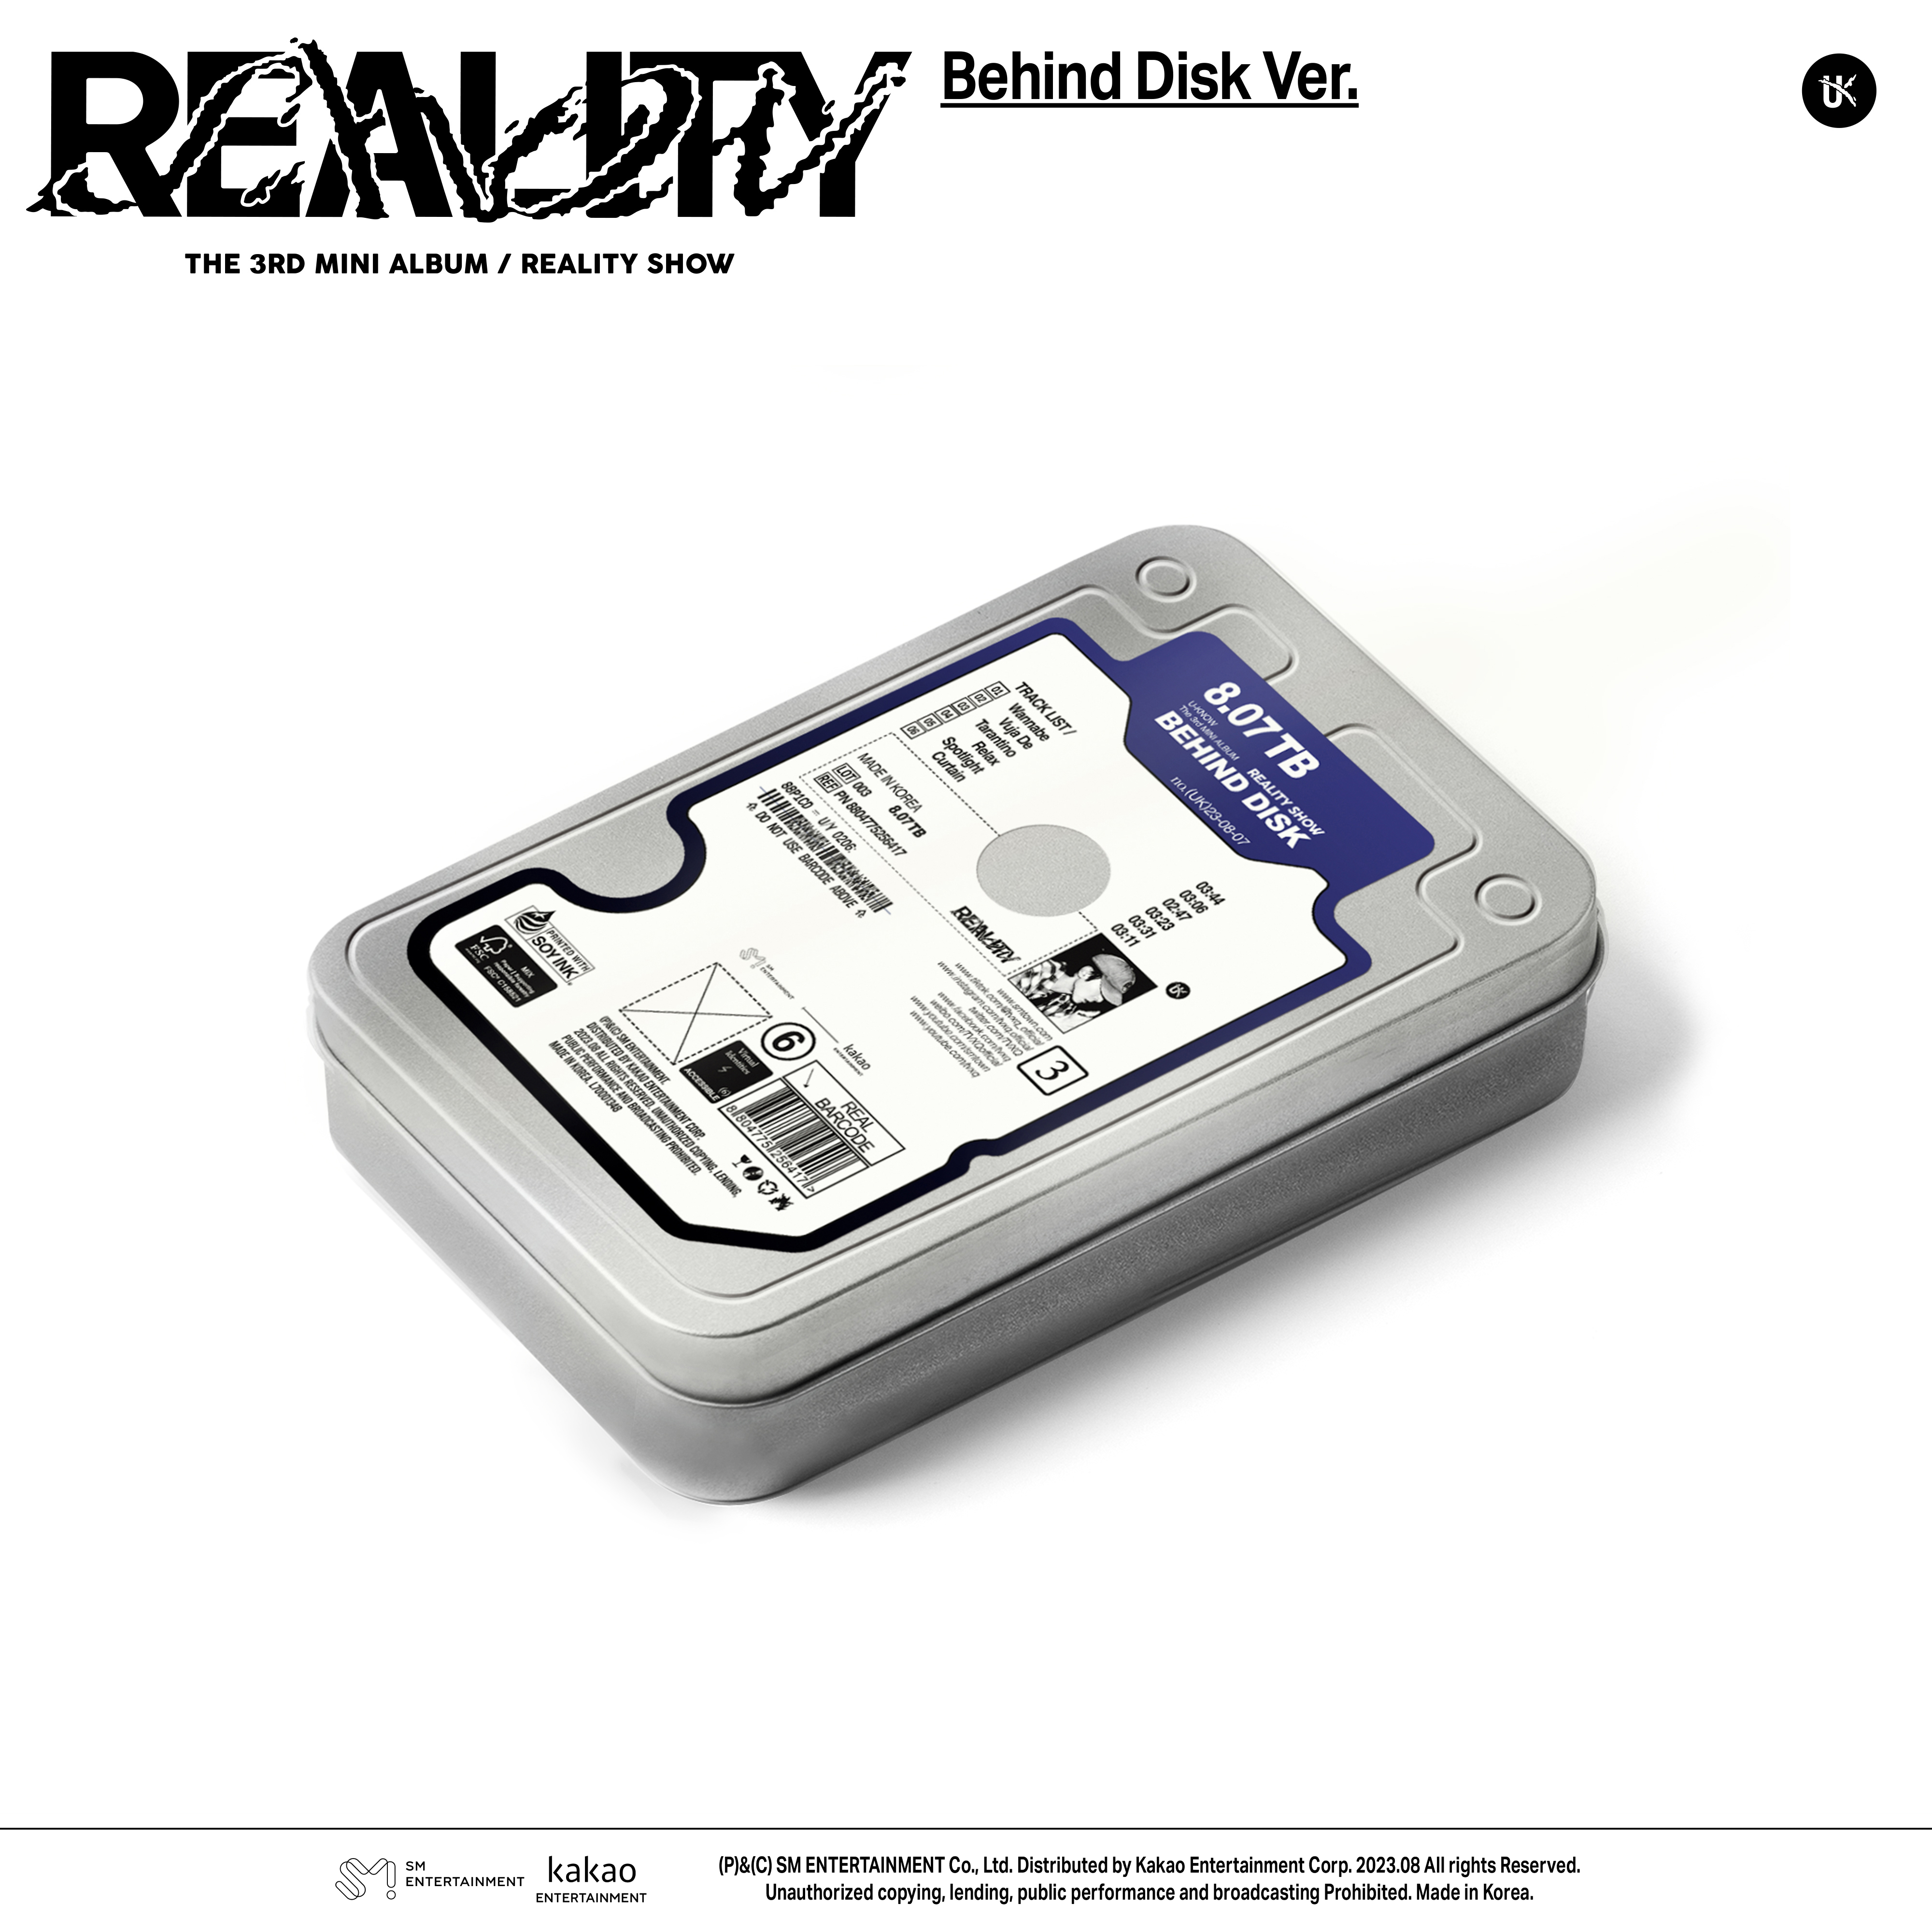 [Behind Disk] 유노윤호 - Reality Show (3RD 미니앨범) (Behind Disk Ver./초회한정반)